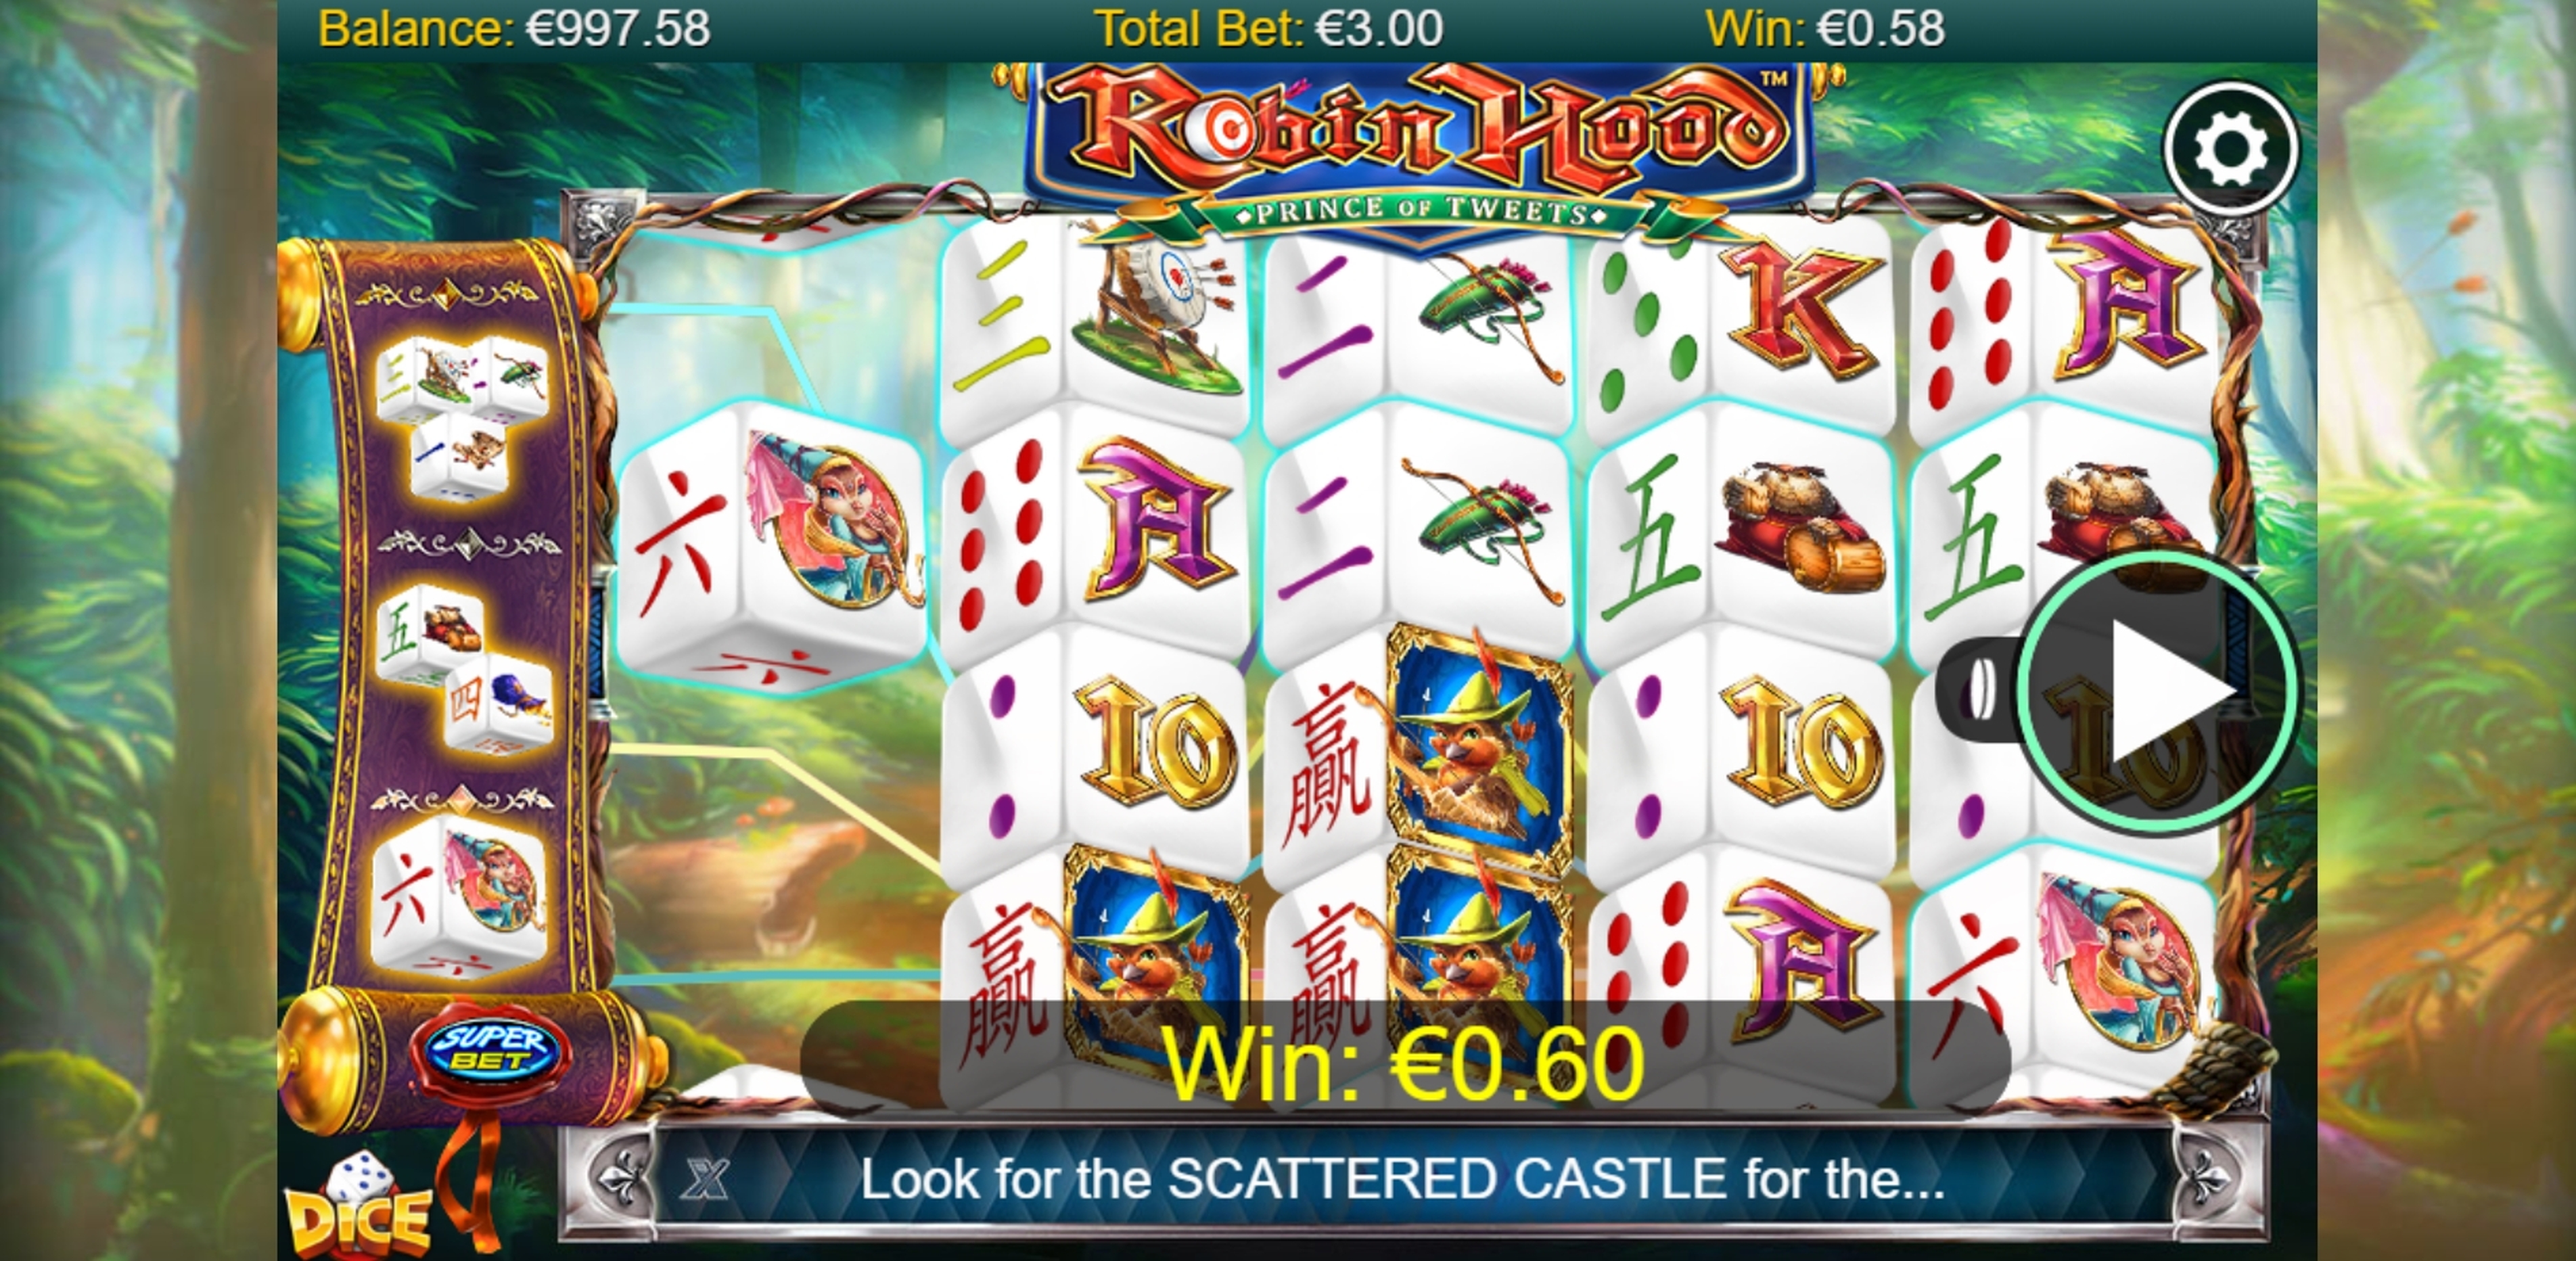 Win Money in Robin Hood Prince of Tweets Dice Free Slot Game by NextGen Gaming